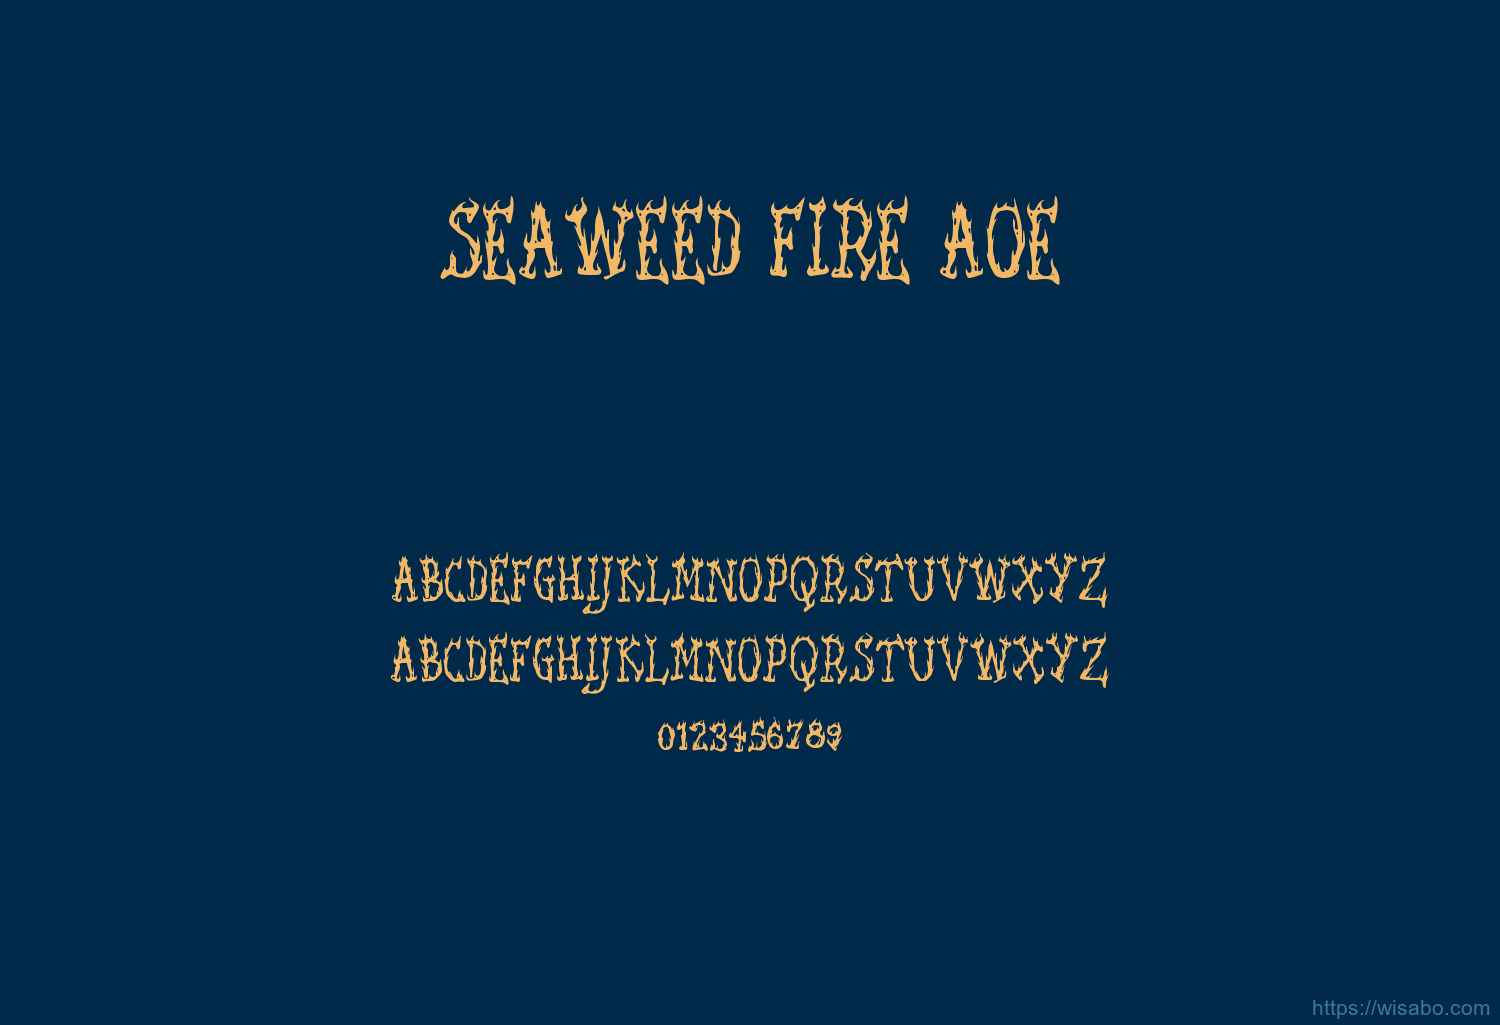 Seaweed Fire Aoe